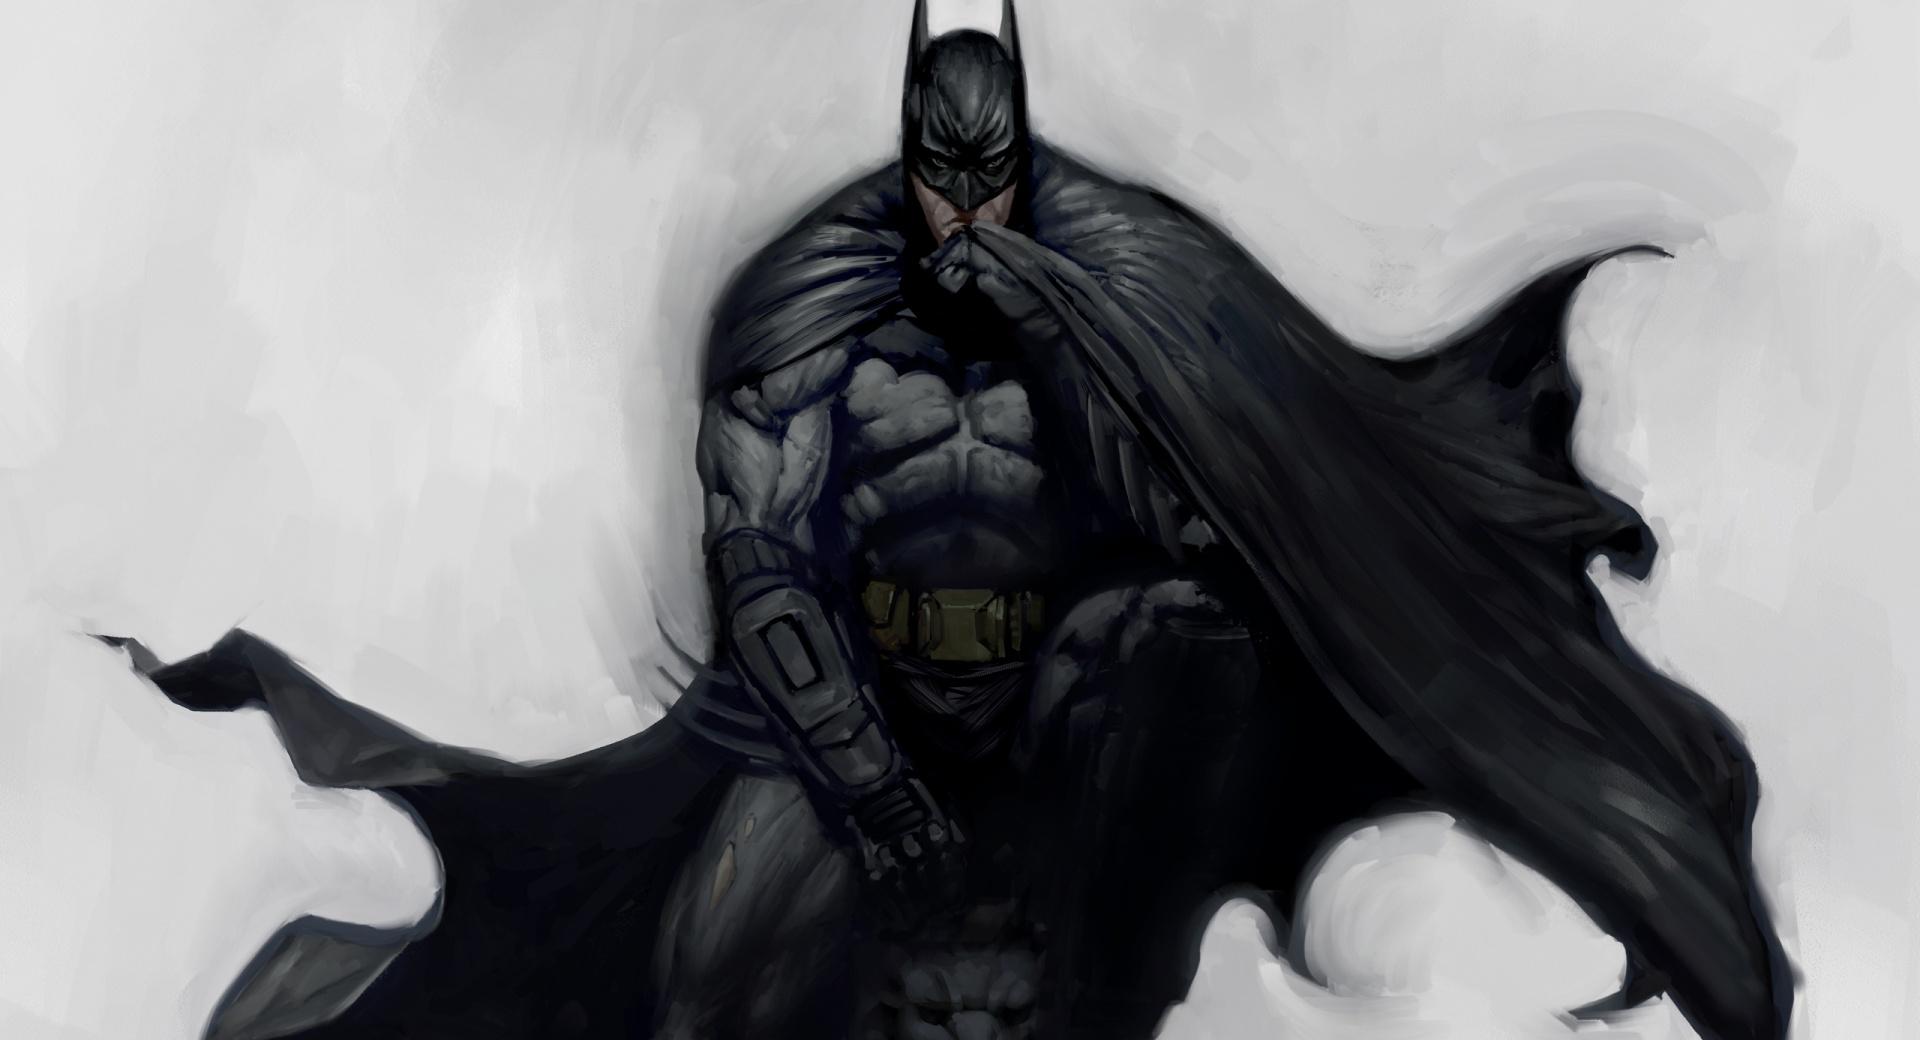 Batman Arkham City Artwork at 1024 x 1024 iPad size wallpapers HD quality